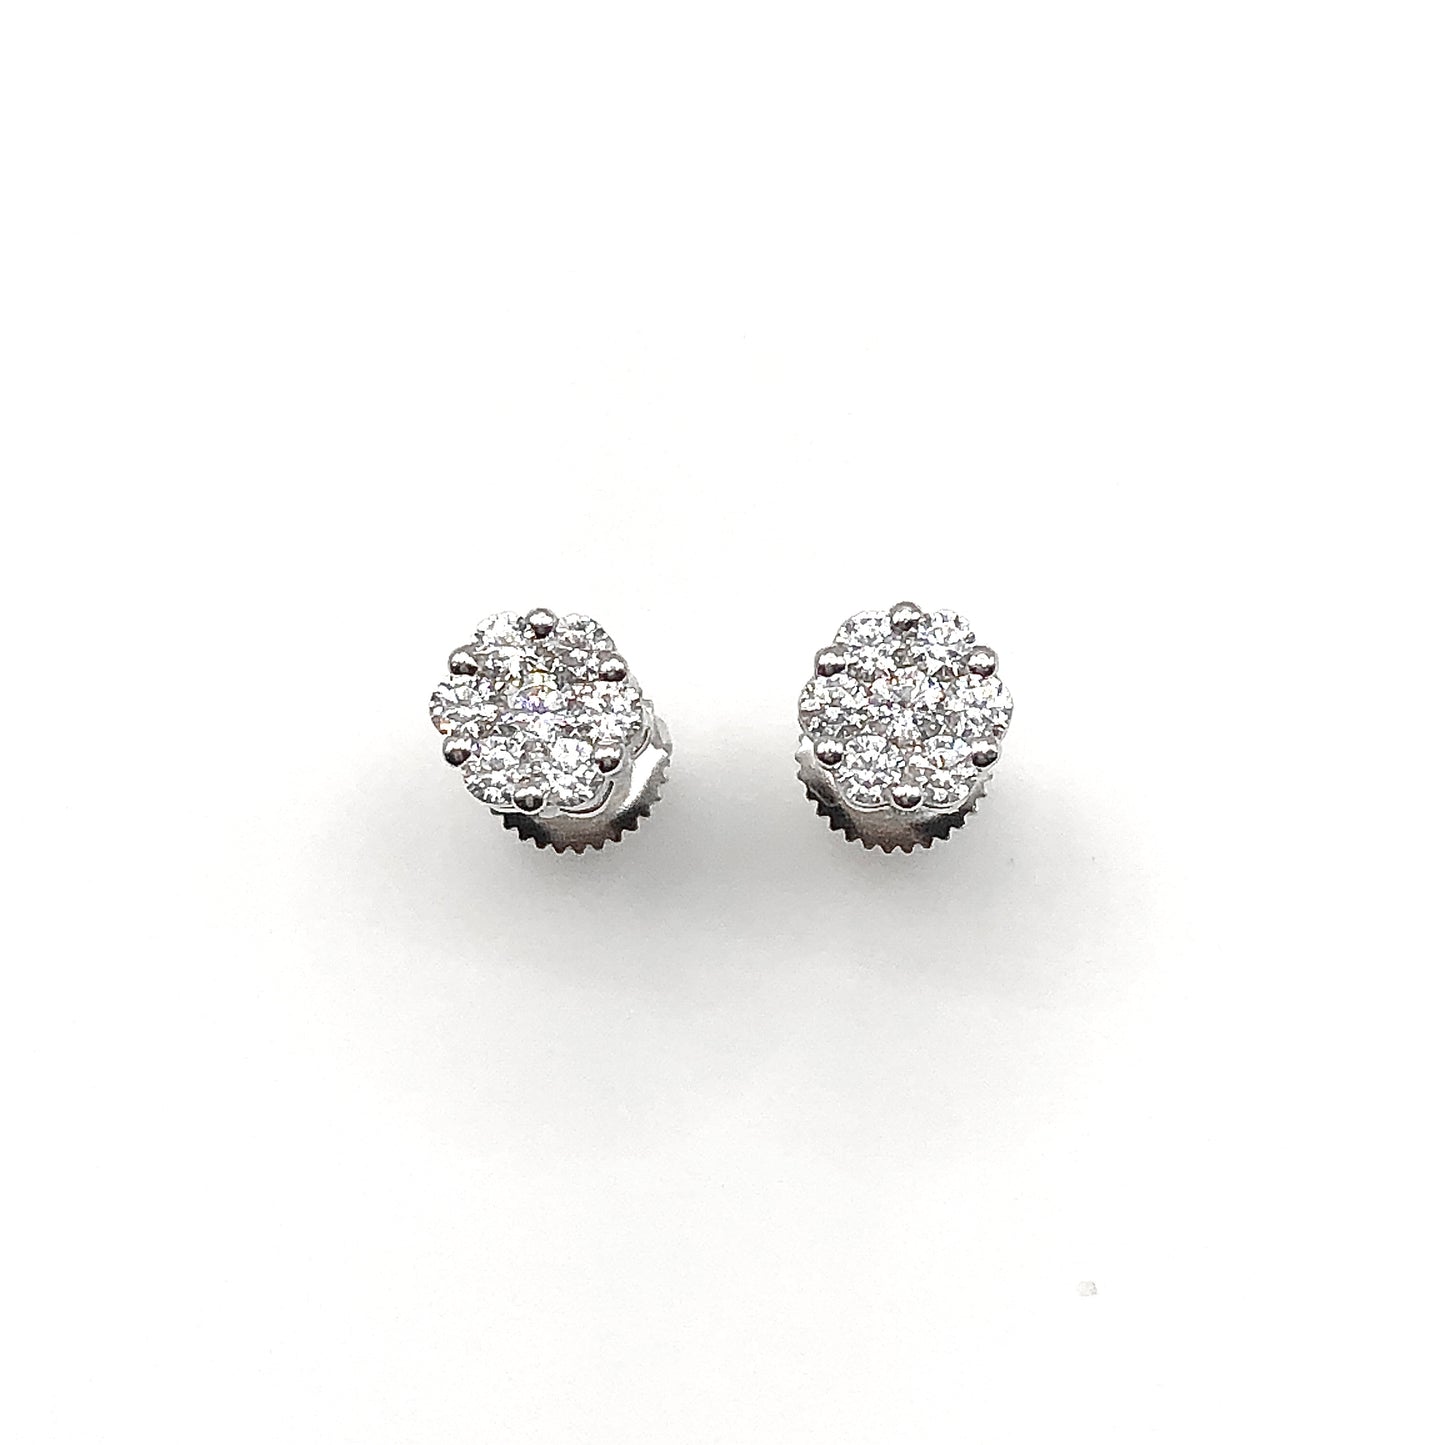 Earrings - Sterling Silver Sparkly CZ Cluster Stud Earrings